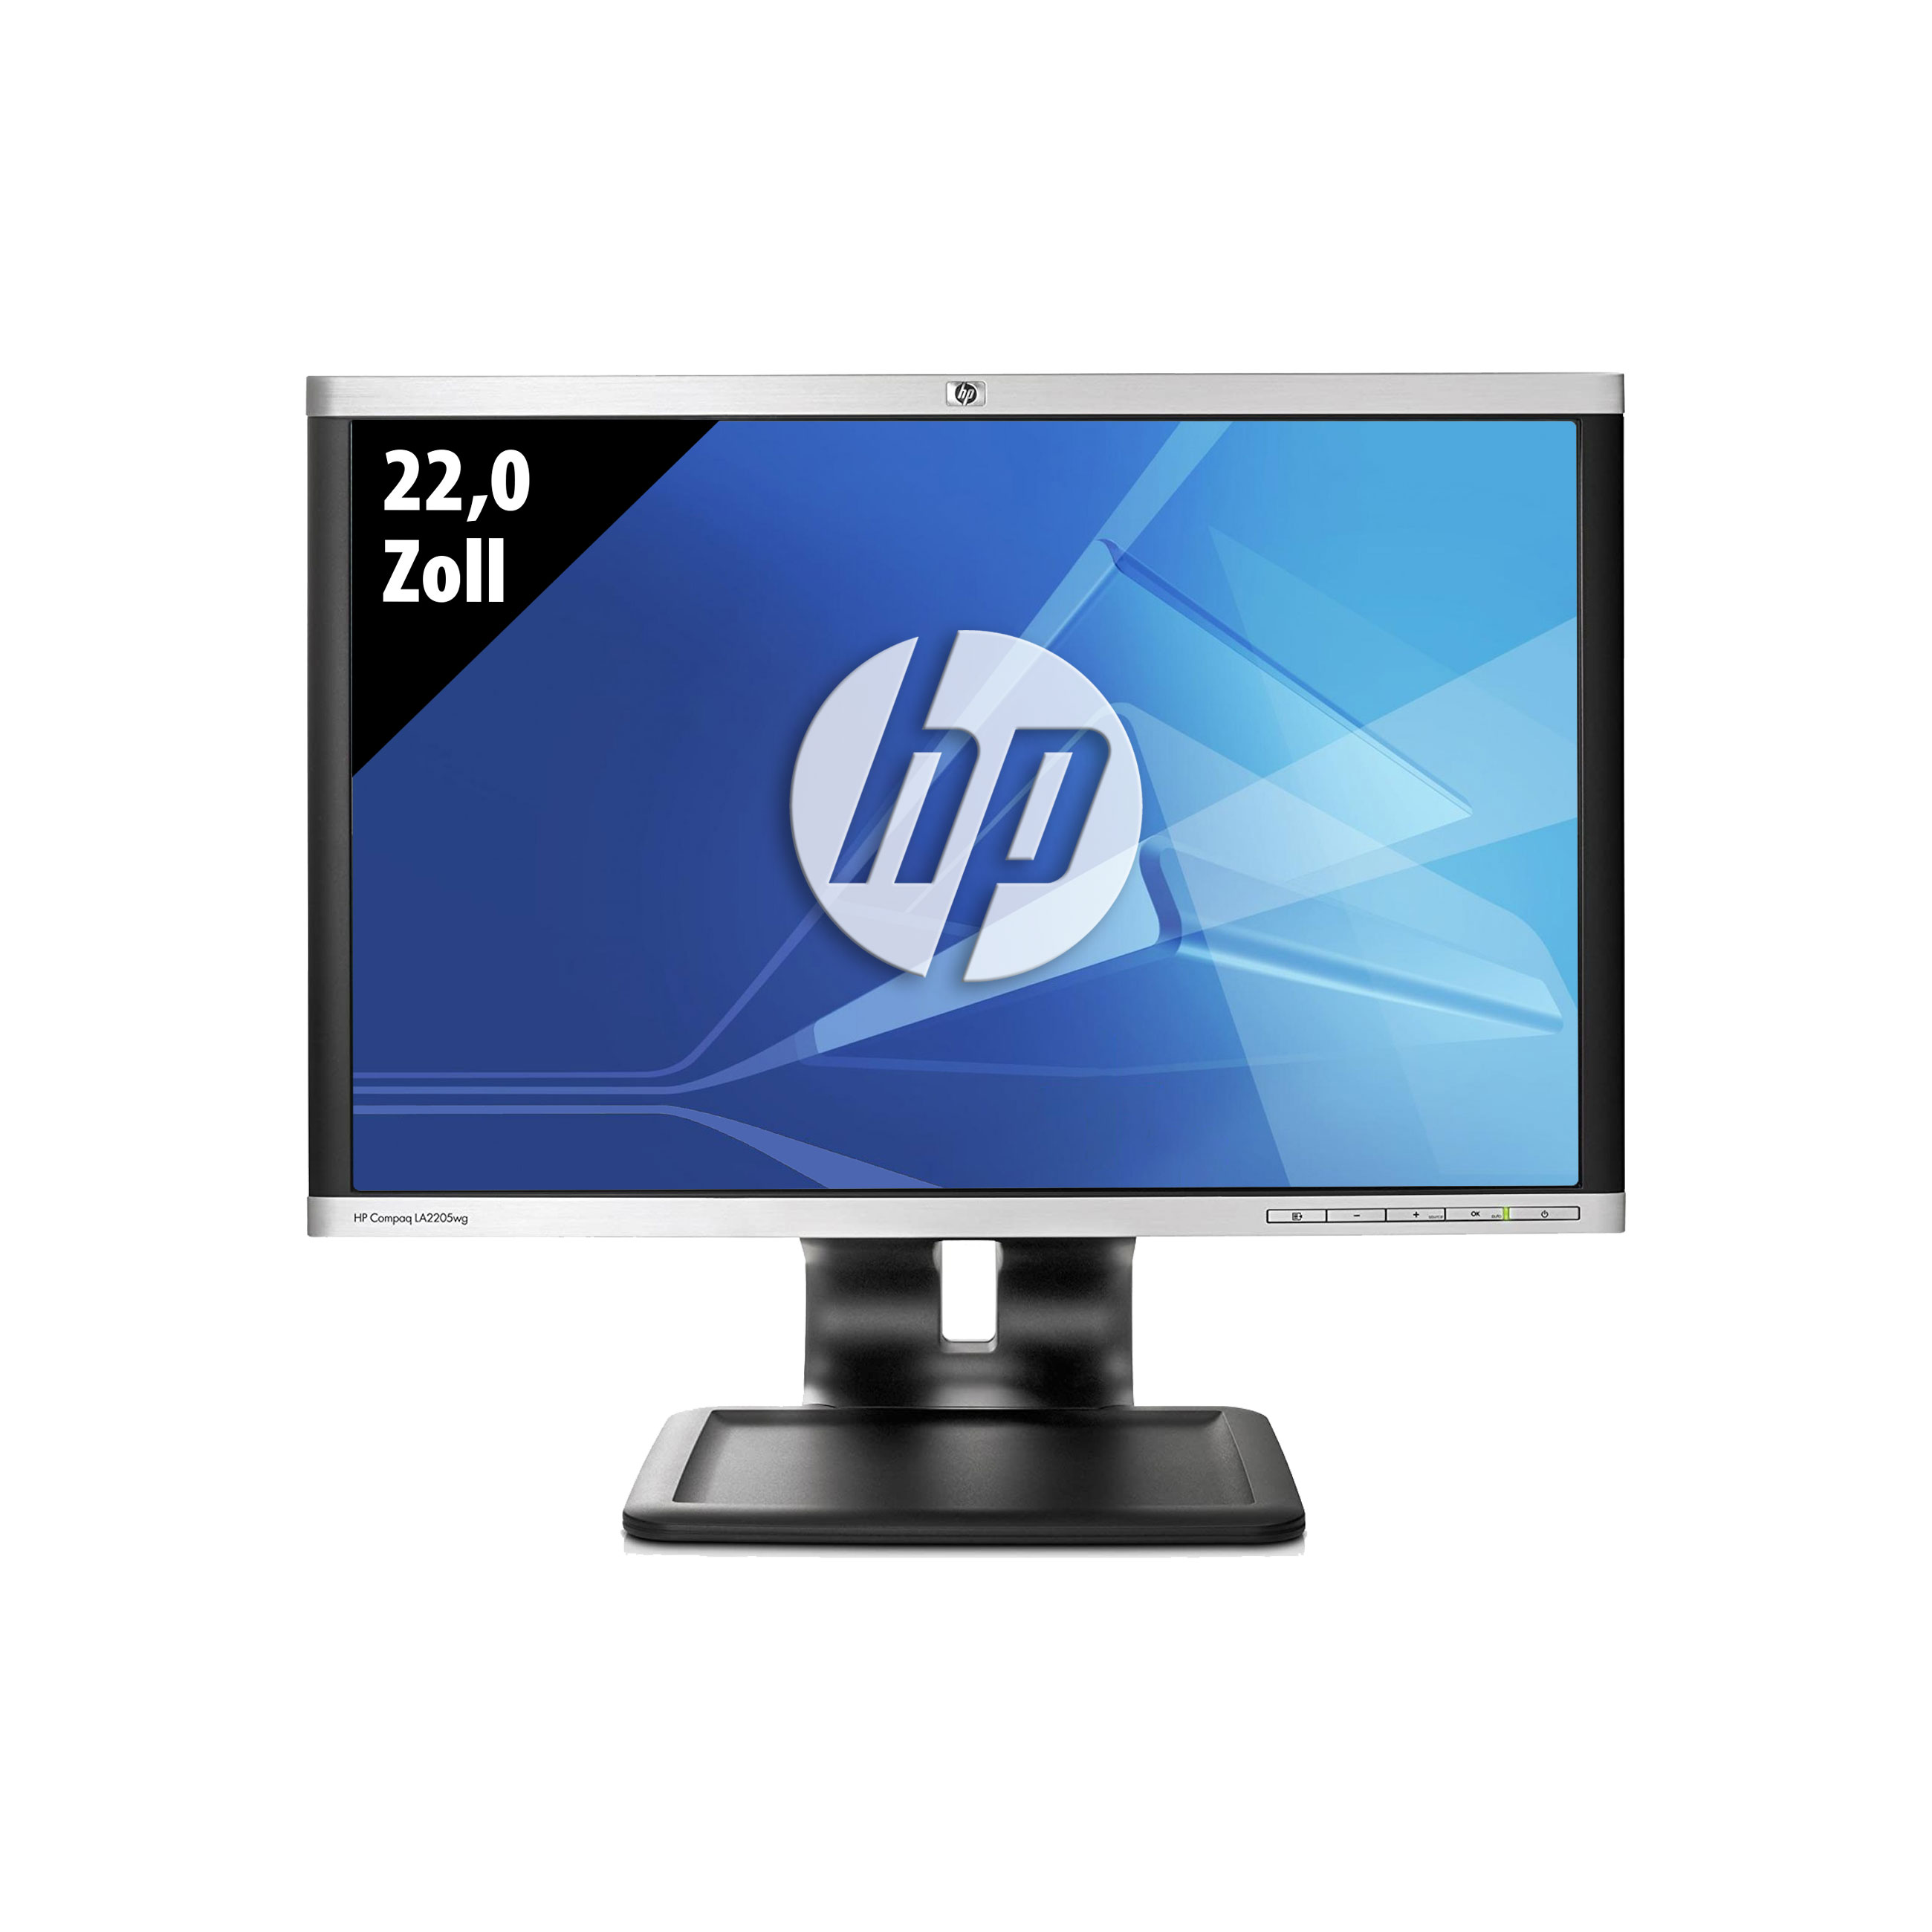 HP LA 2205wg Monitor